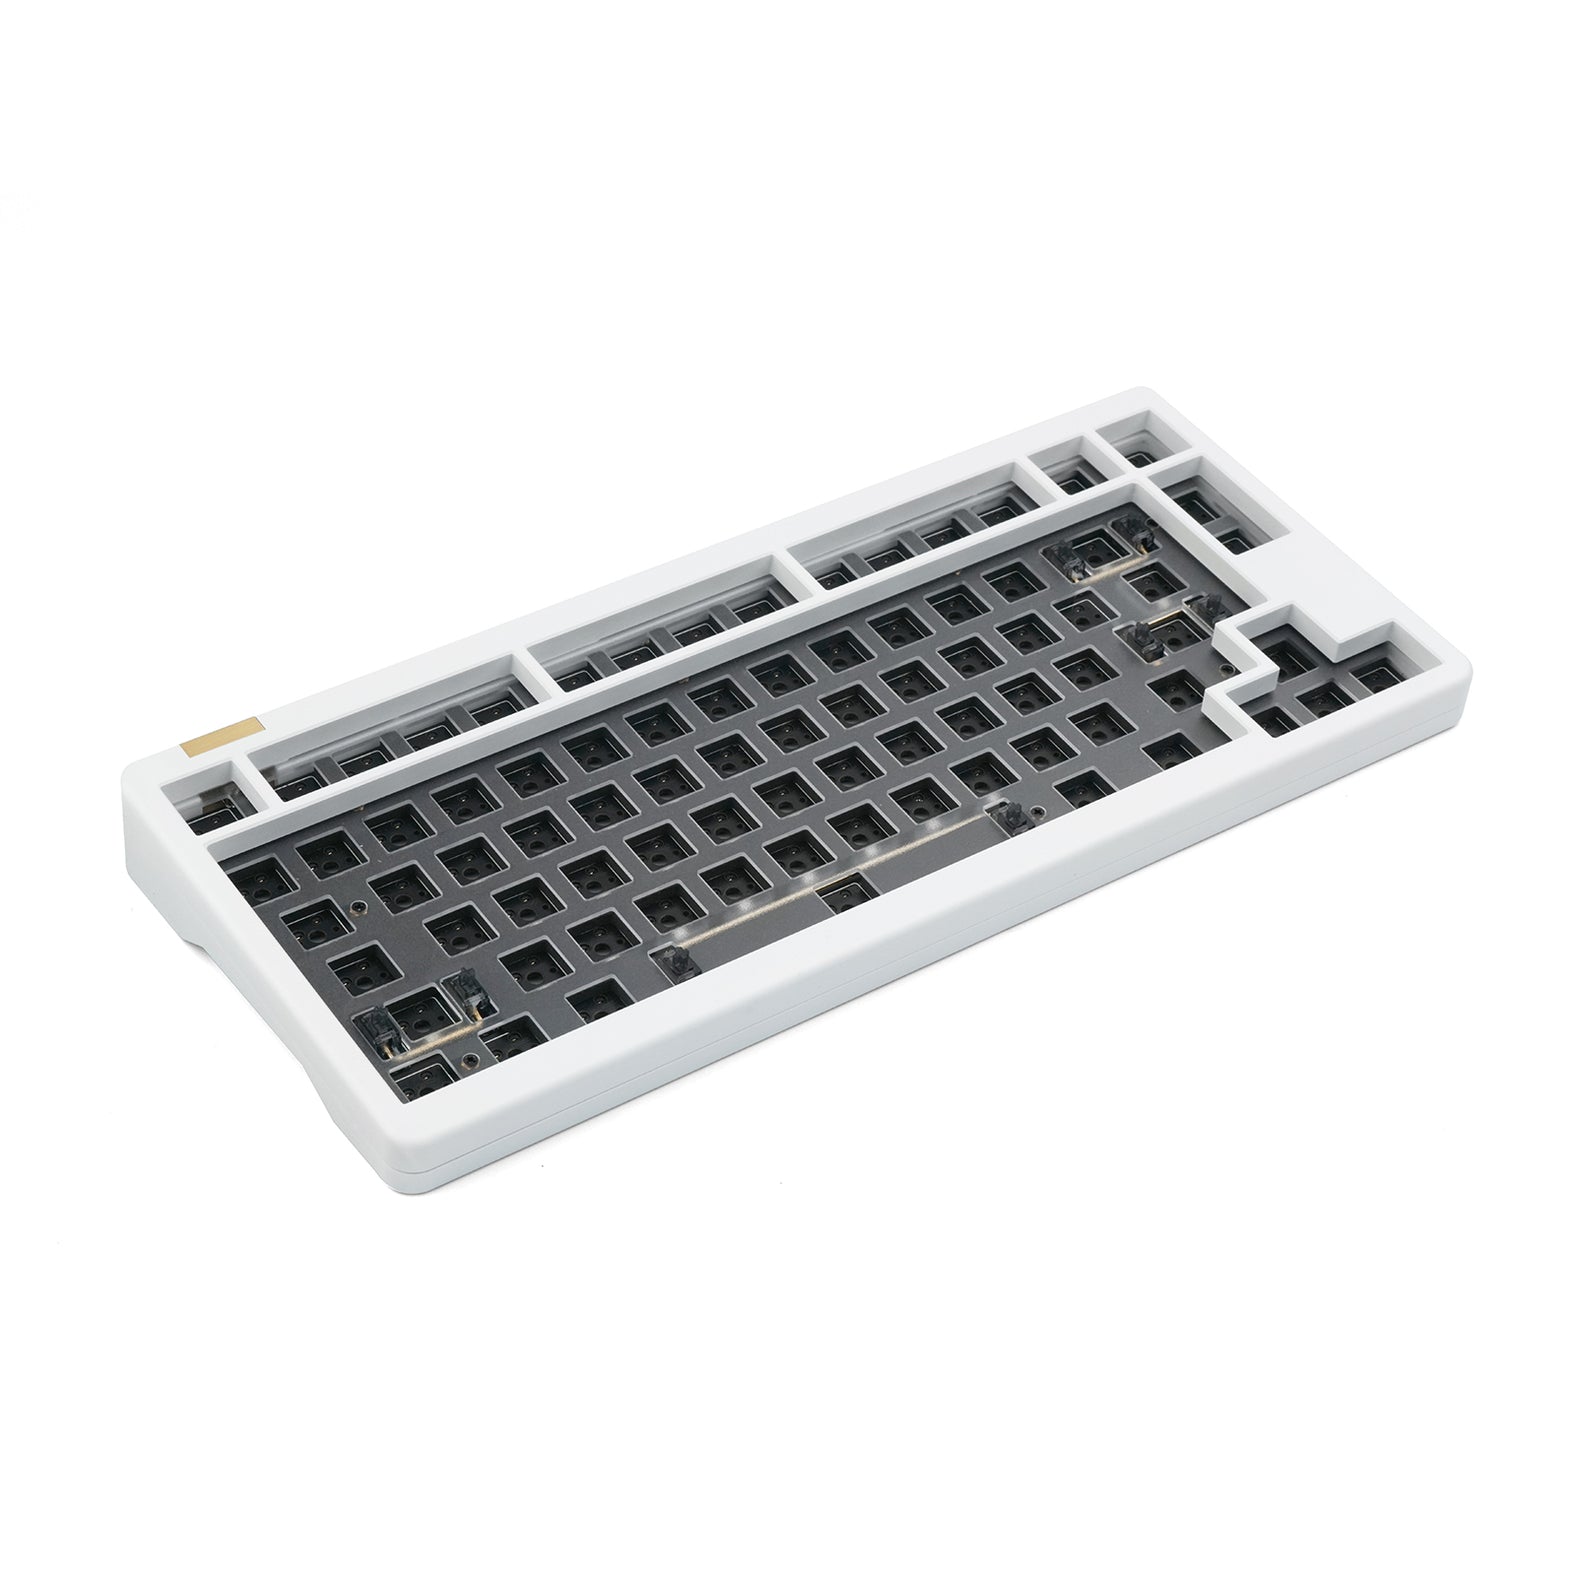 IDOBAO ID80 V3 Bestype MX Mechanical Keyboard Barebone Kit(Gasket Mount)